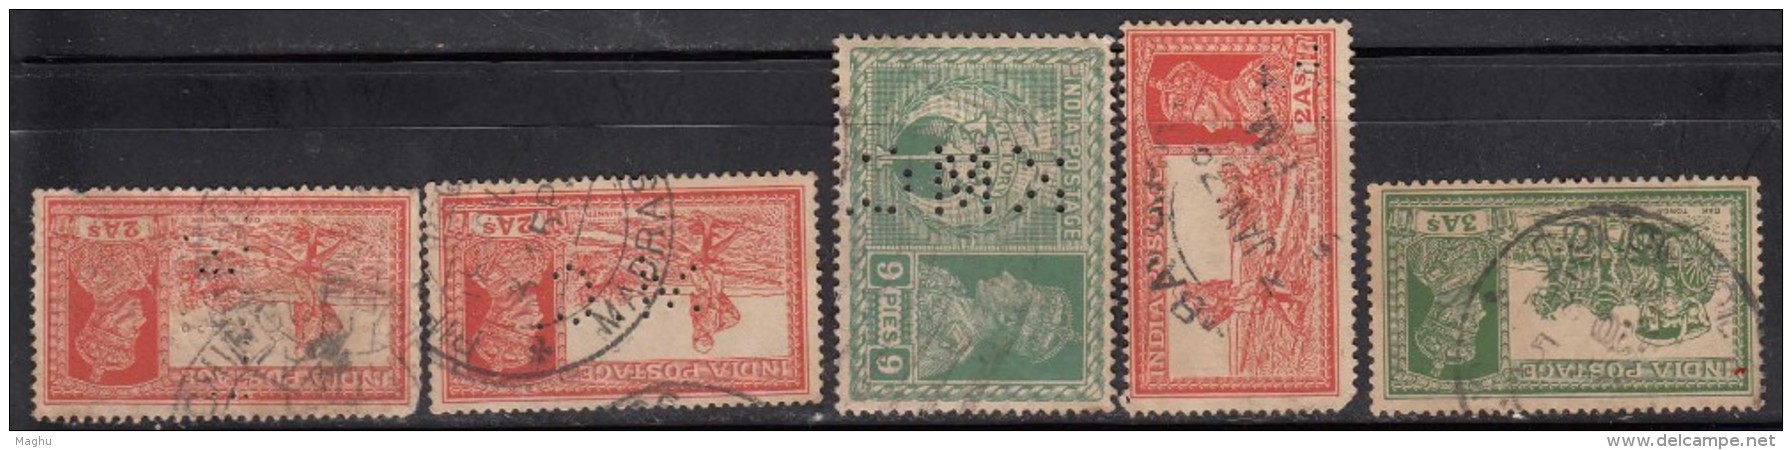 5 Diff., Perfins / Perfin Of KG VI Series, King George British India Used - Perforadas